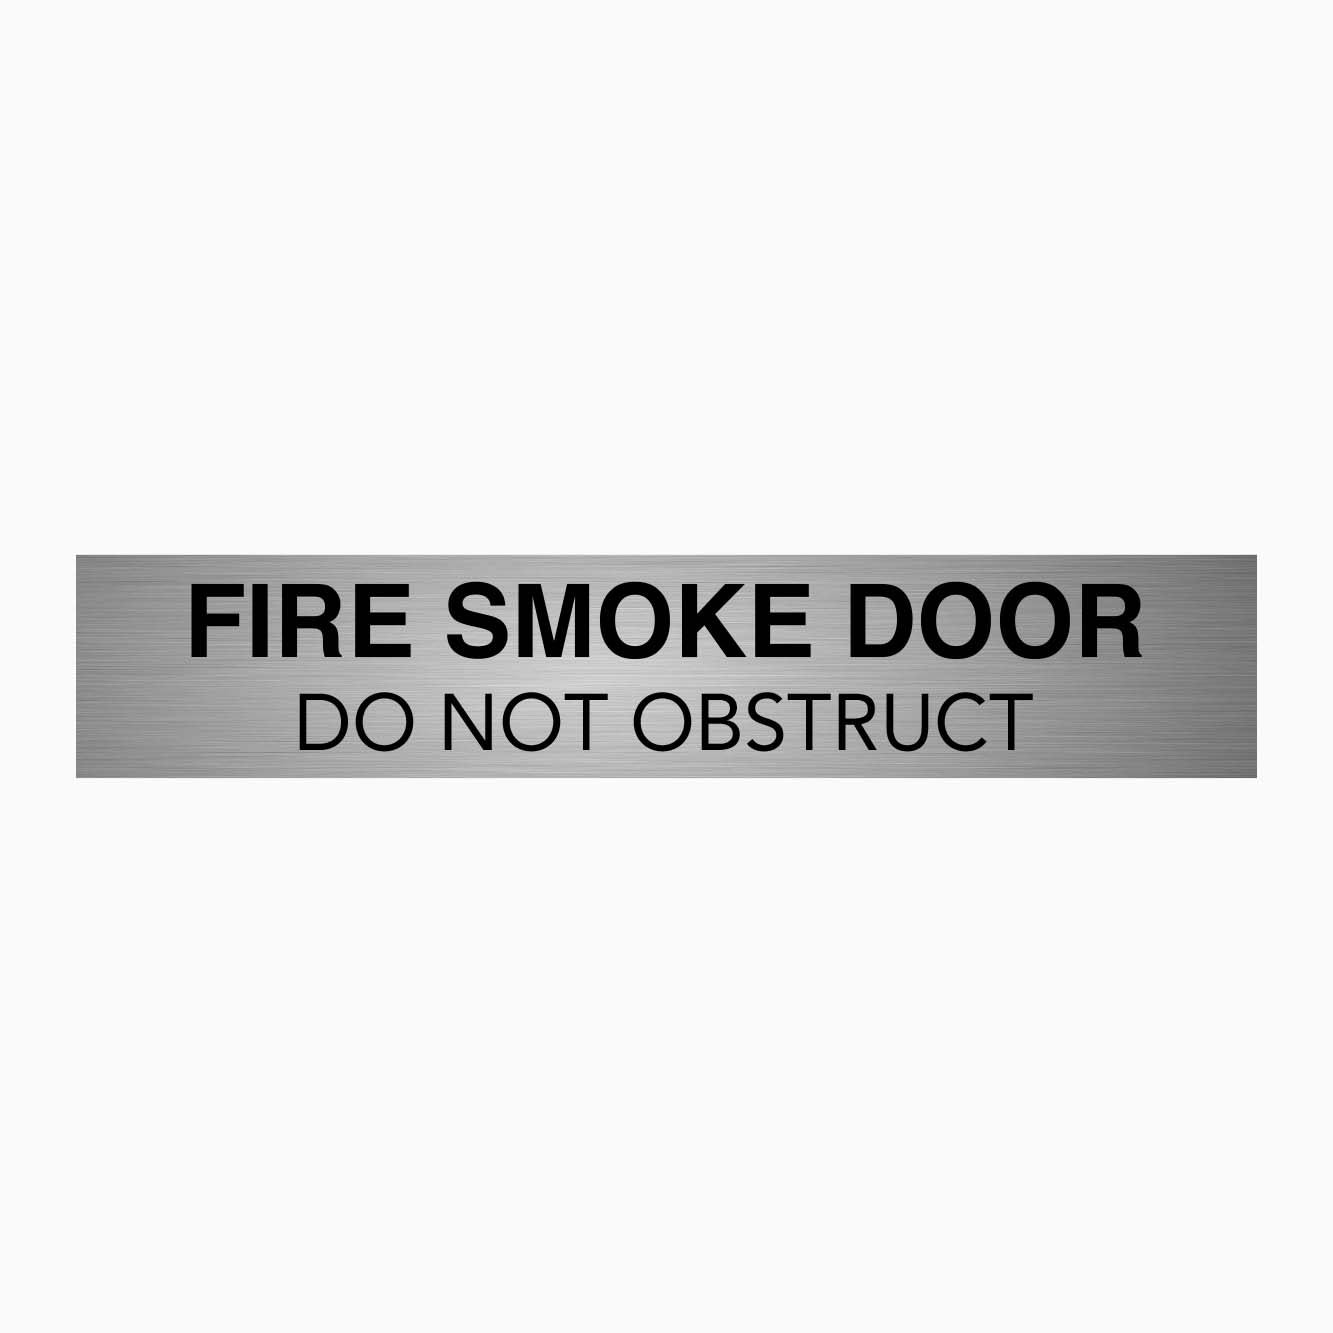 FIRE SMOKE DOOR DO NOT OBSTRUCT SIGN - GET SIGNS